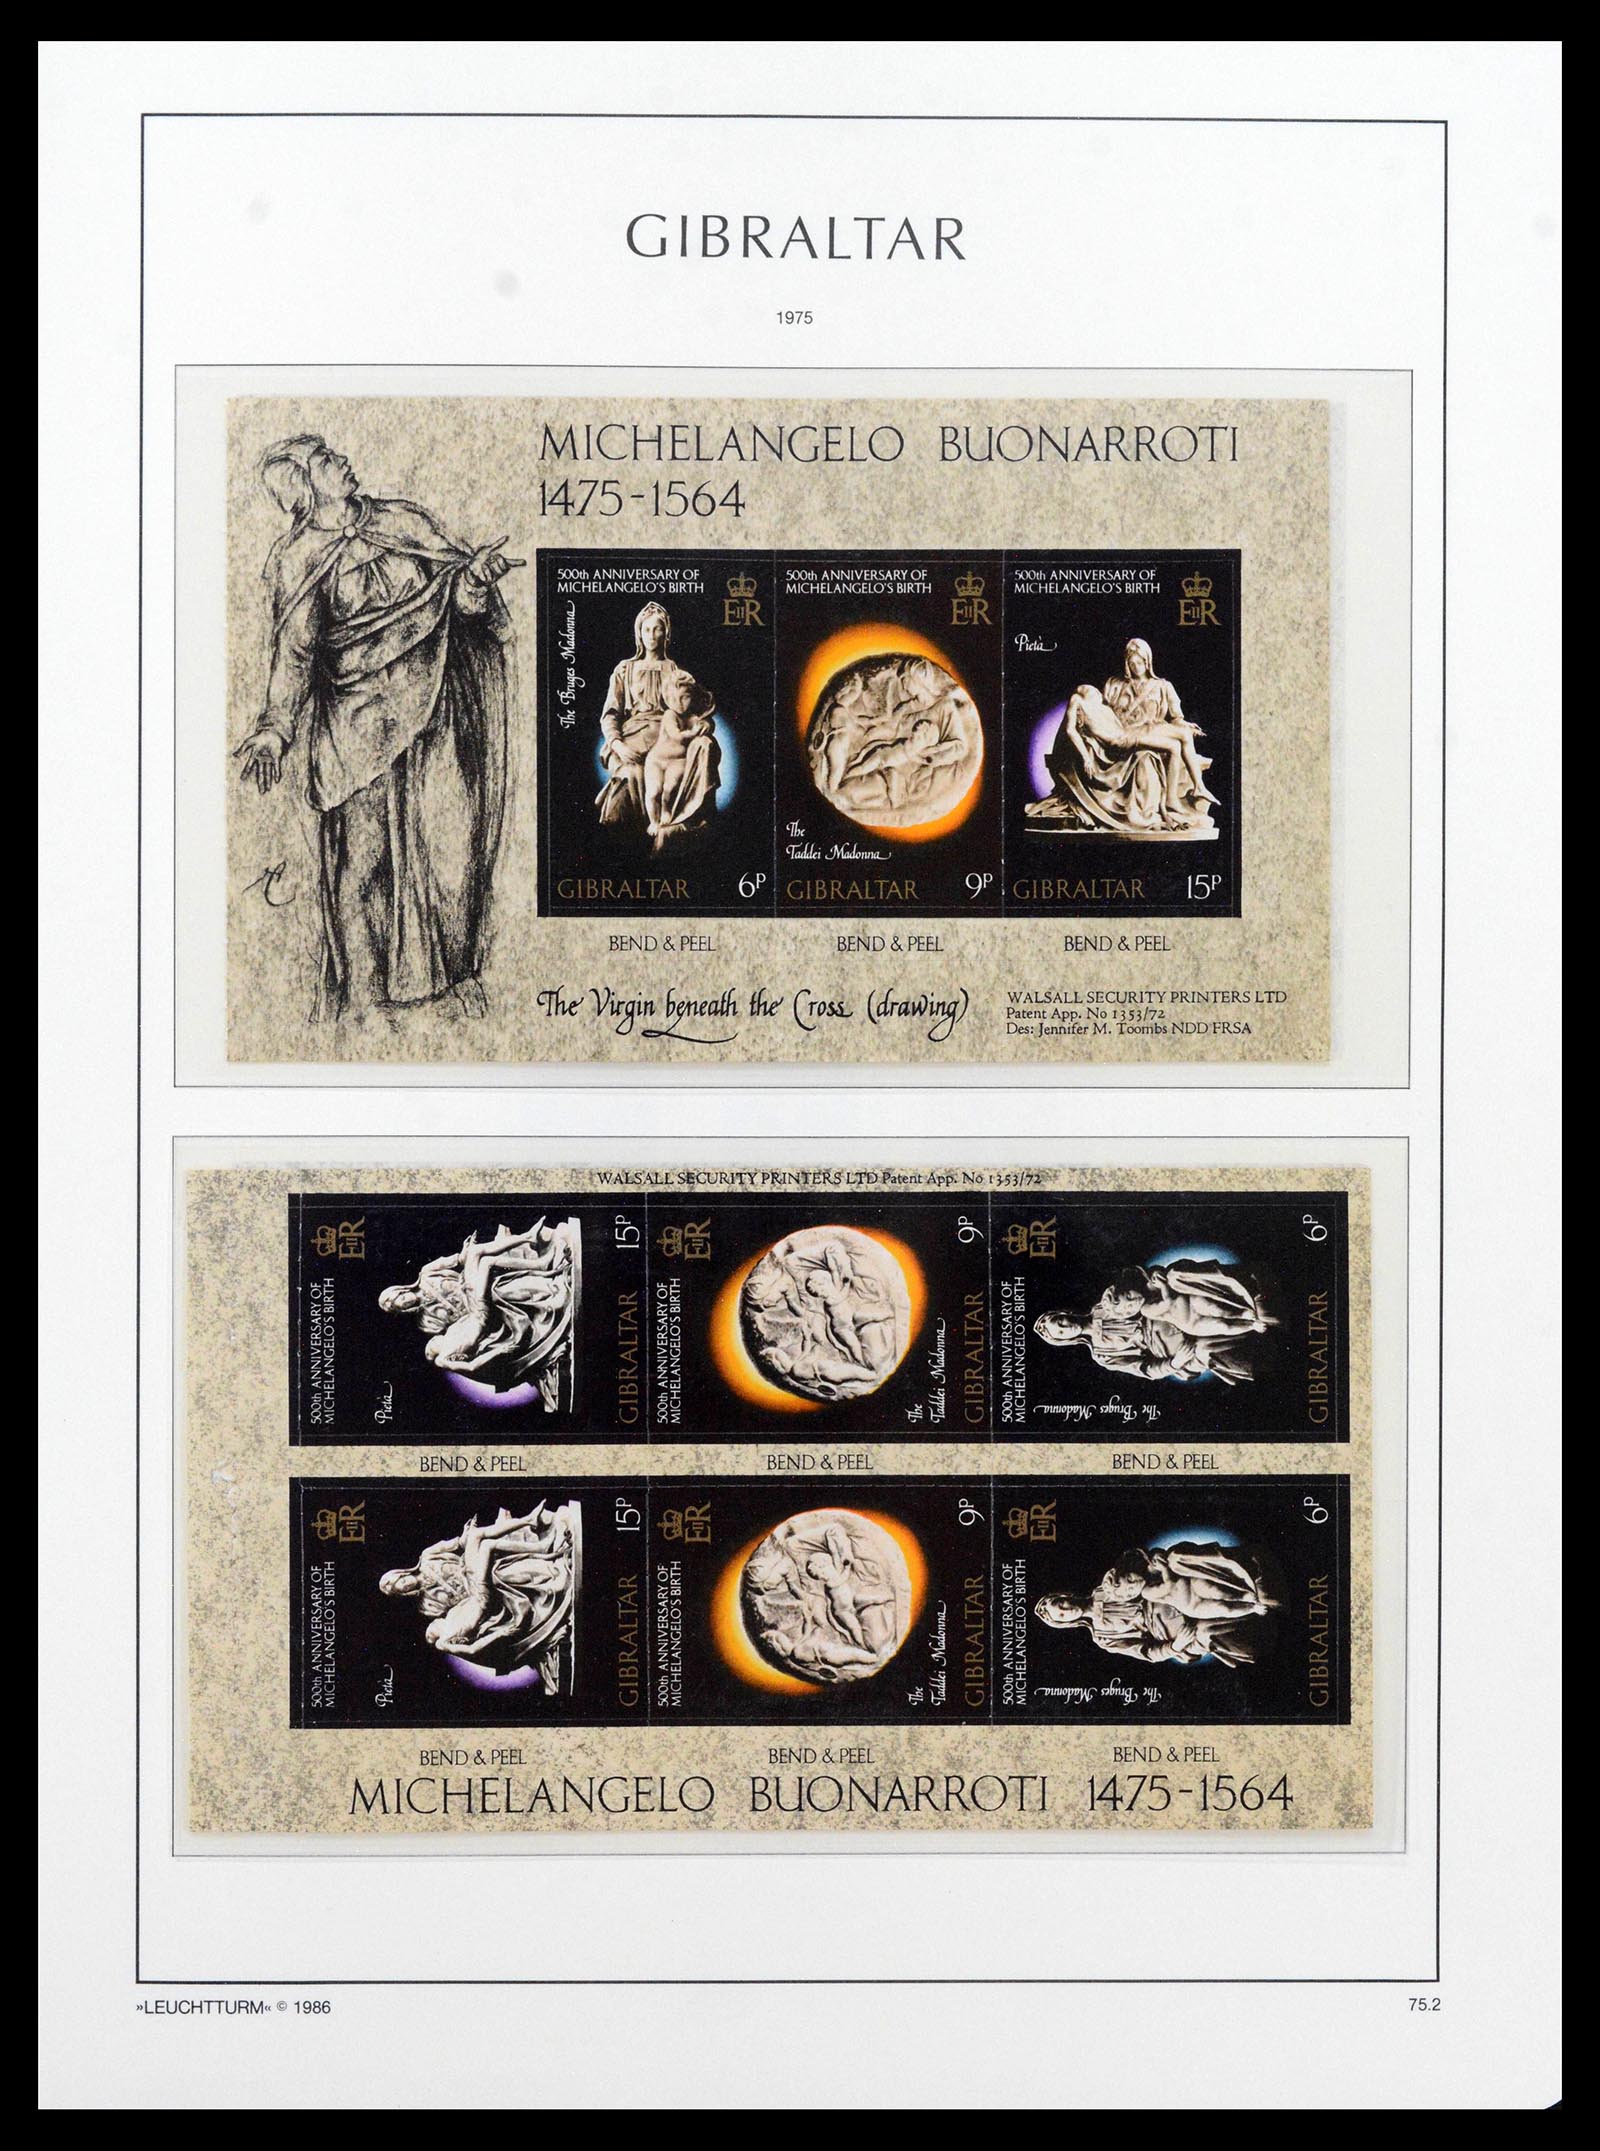 39158 0033 - Stamp collection 39158 Gibraltar 1886-2013.